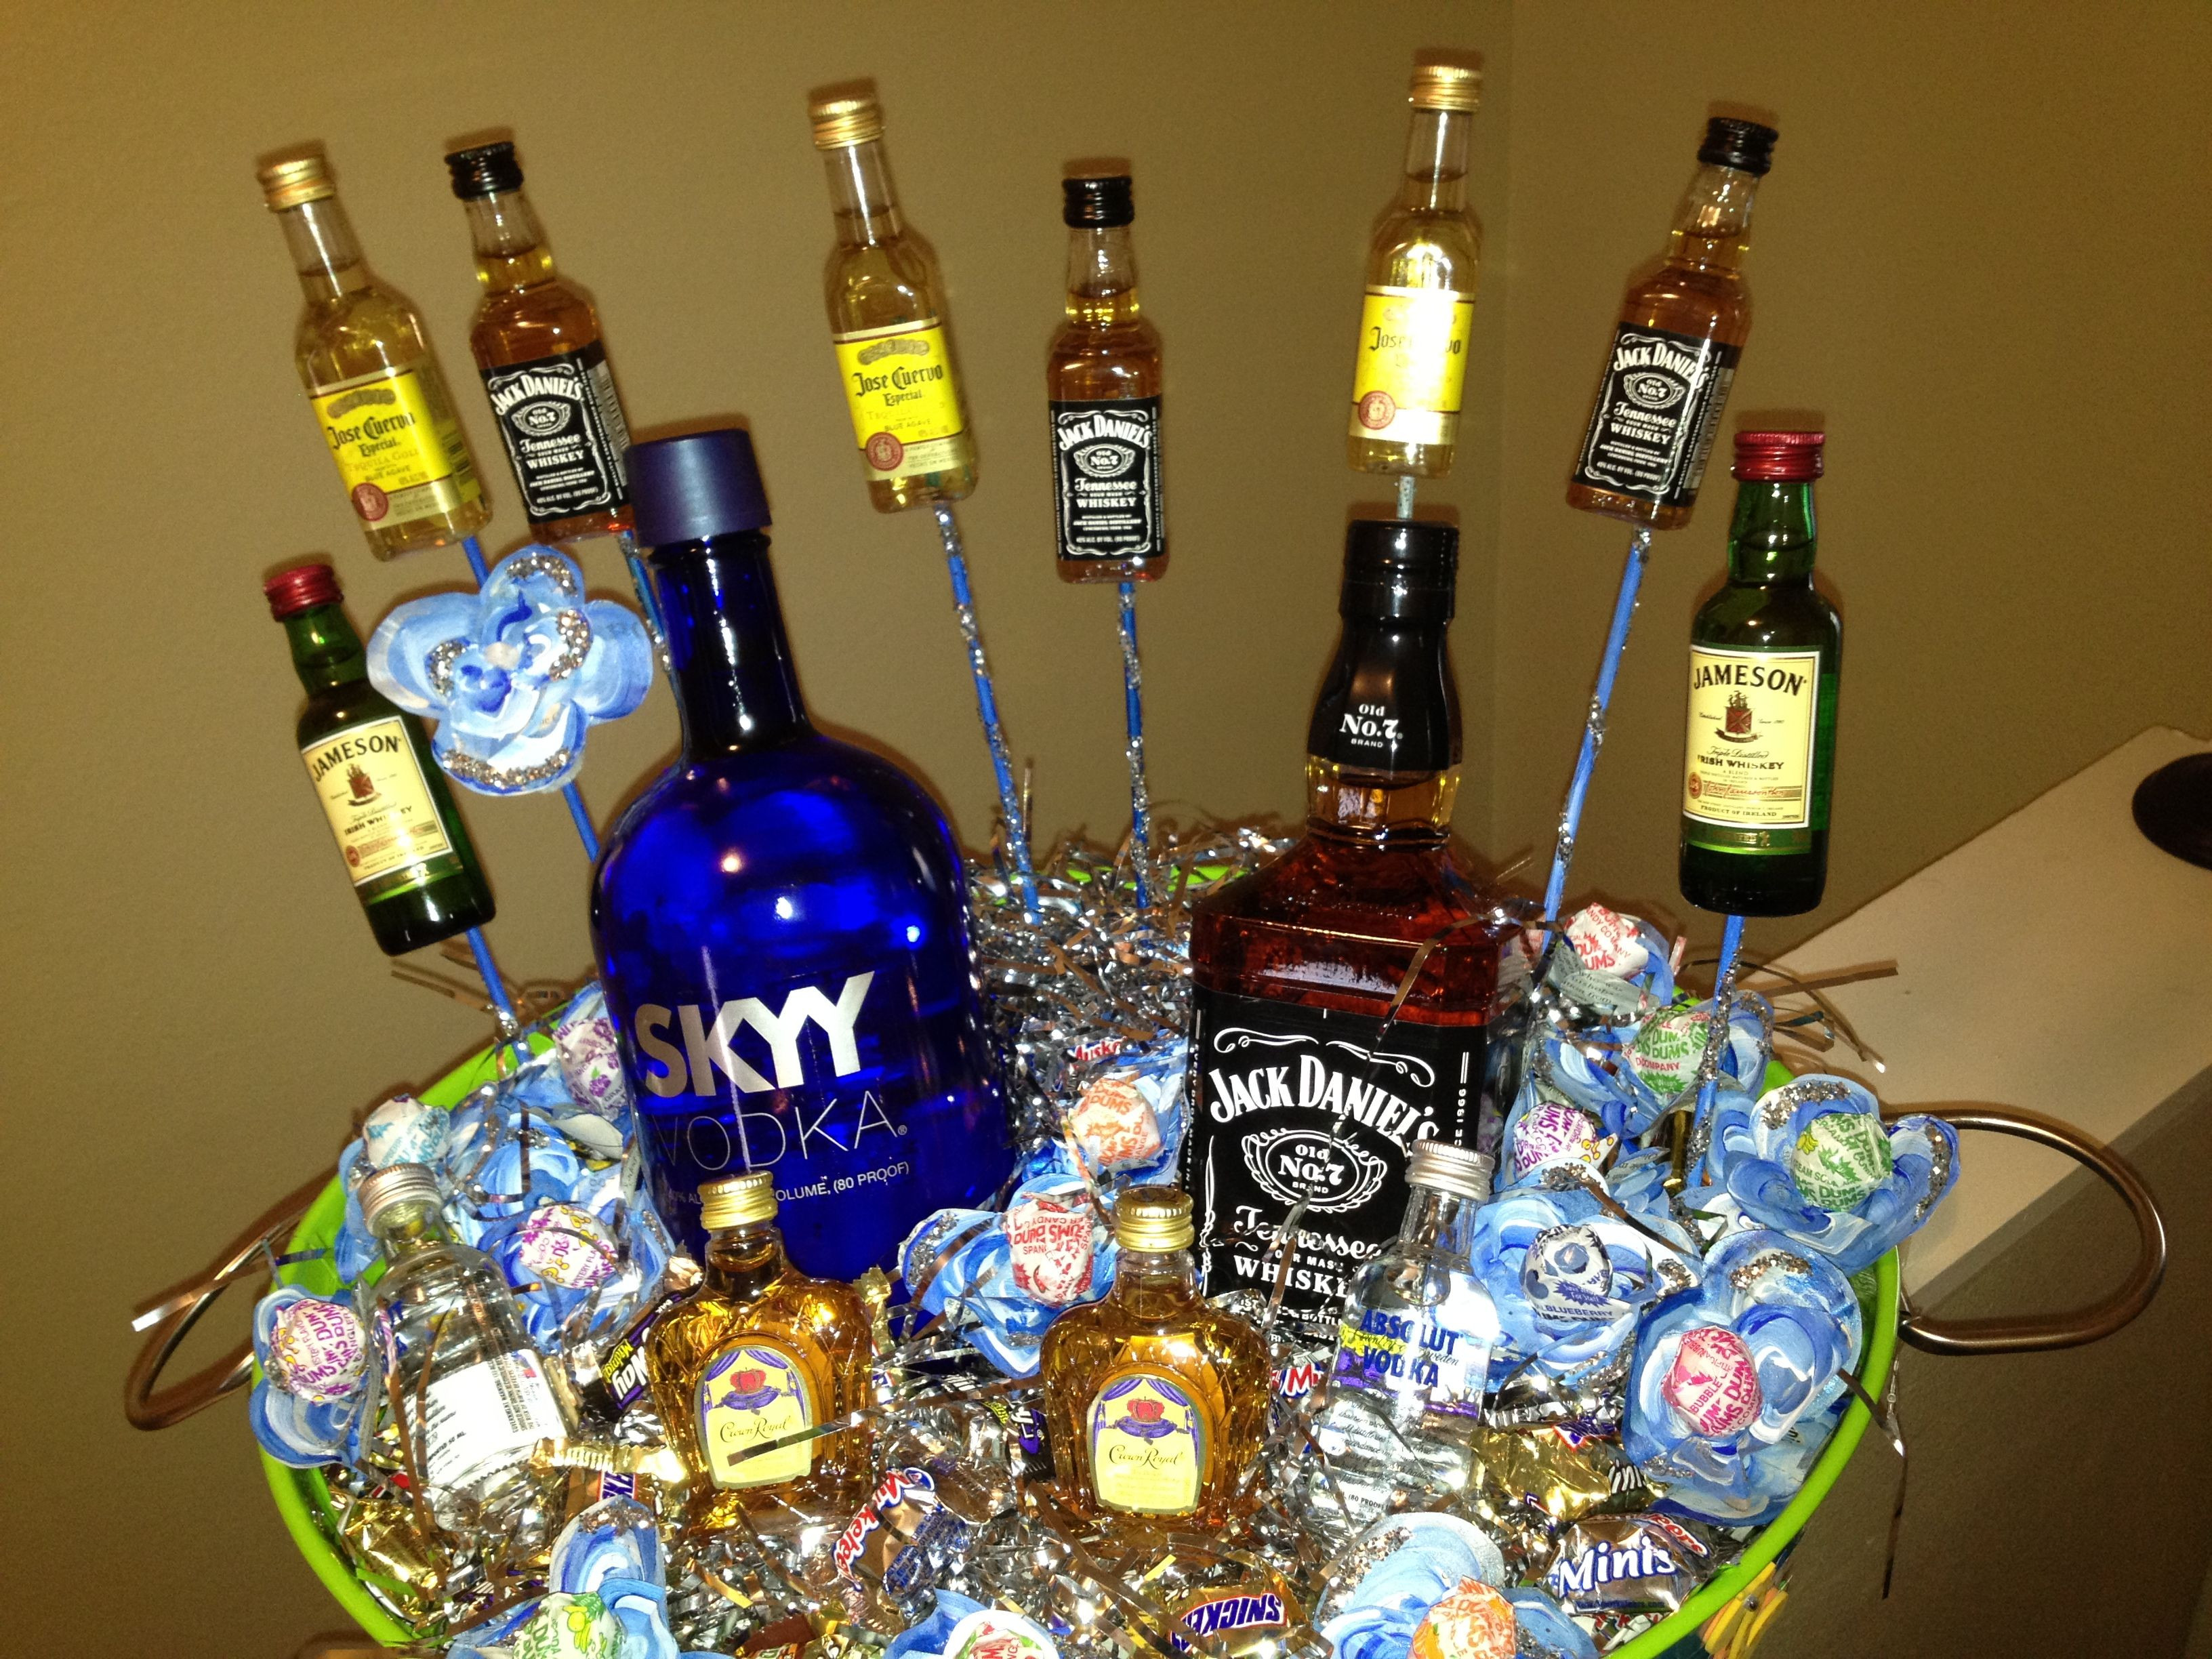 Best ideas about Liquor Gift Basket Ideas
. Save or Pin 21st Birthday Liquor Basket craft ideas Now.